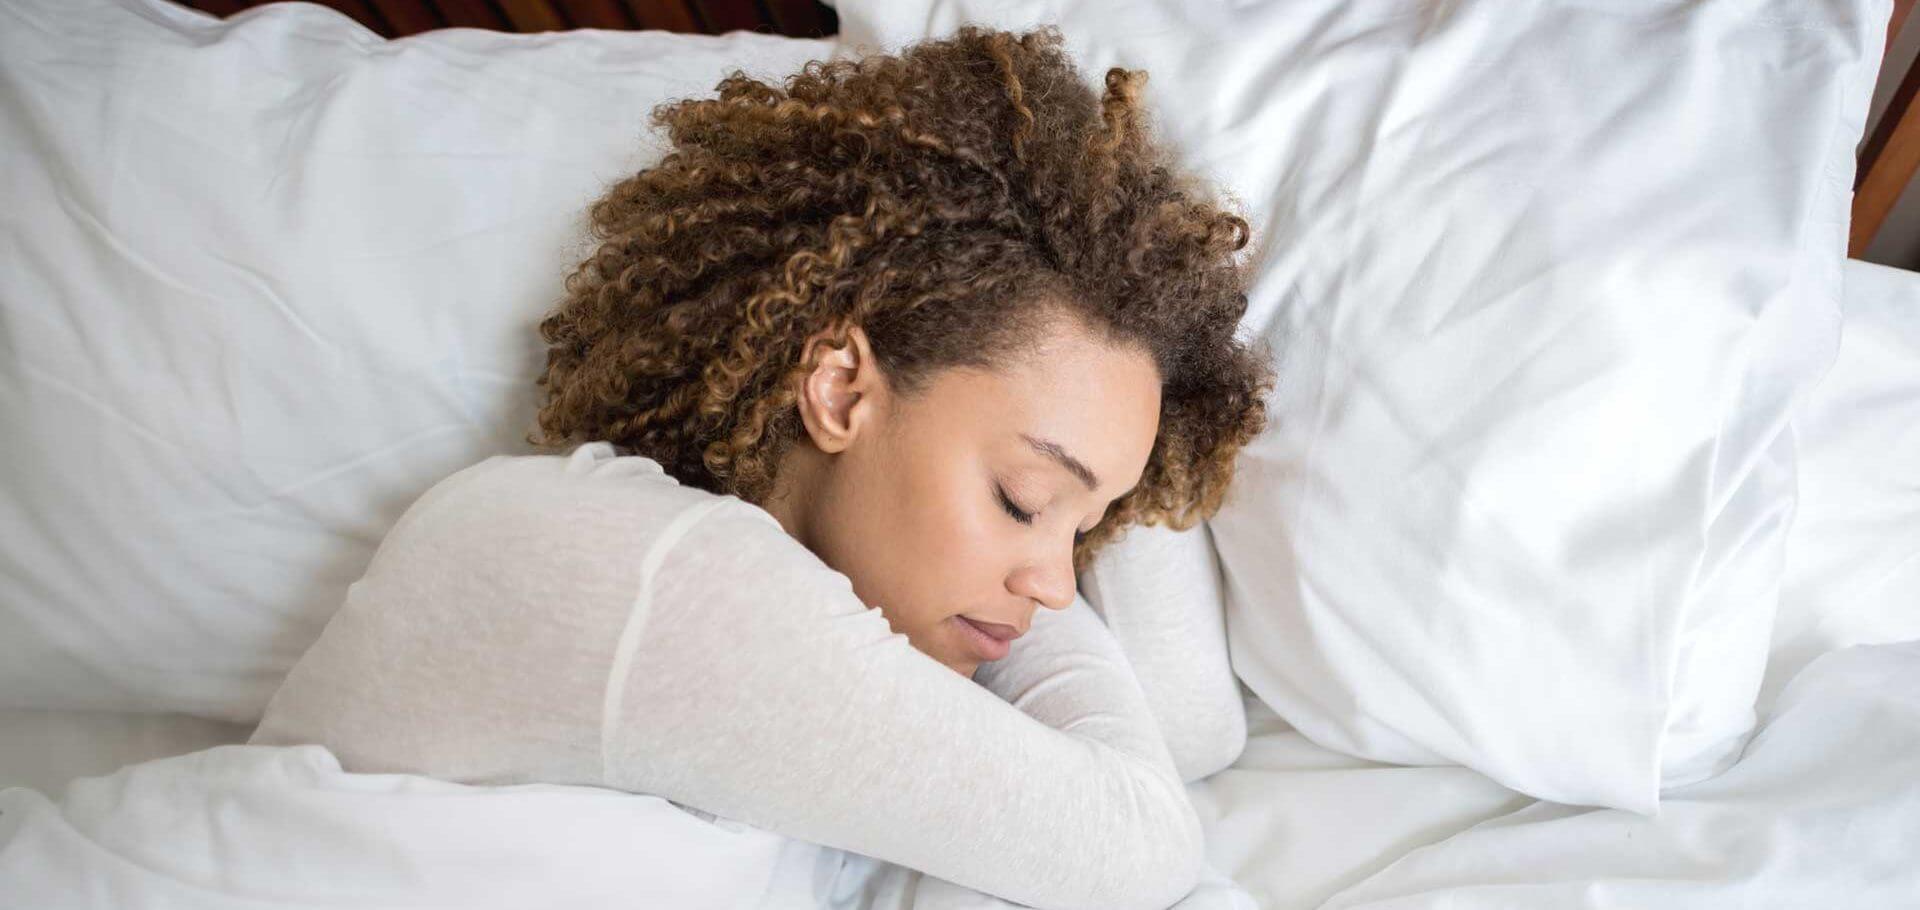 Get the rest you deserve: glycine can help you enjoy deeper, healthier sleep